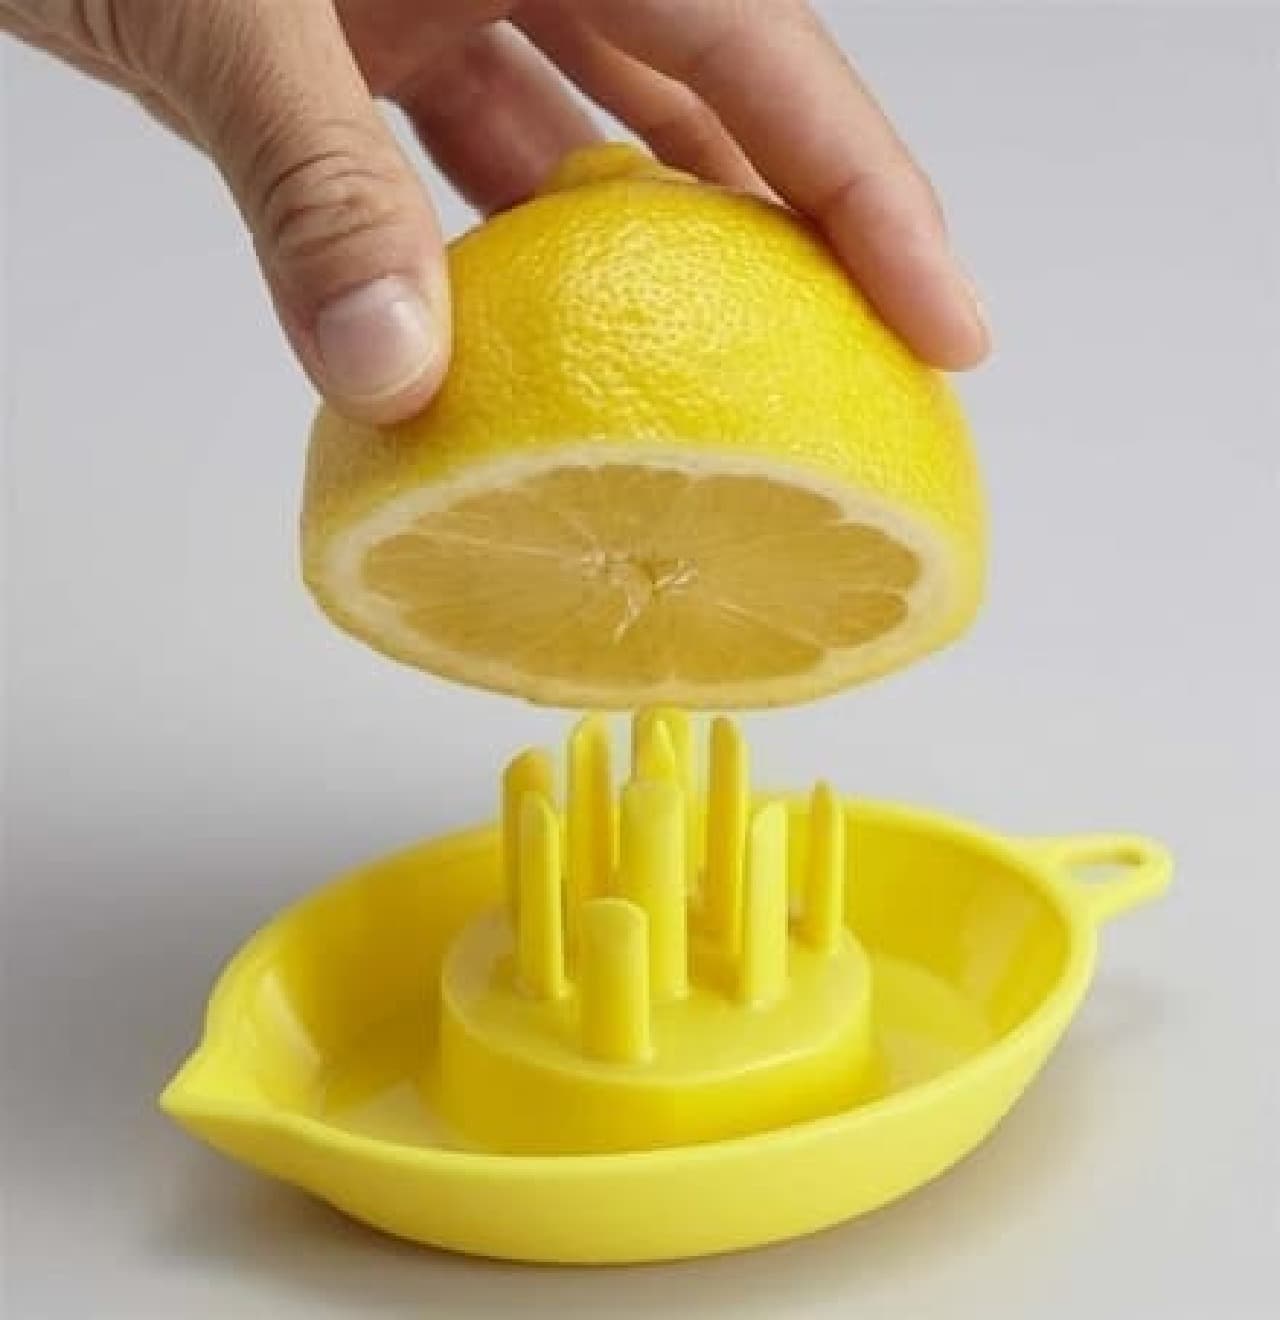 Adult lemon squeezing revolution